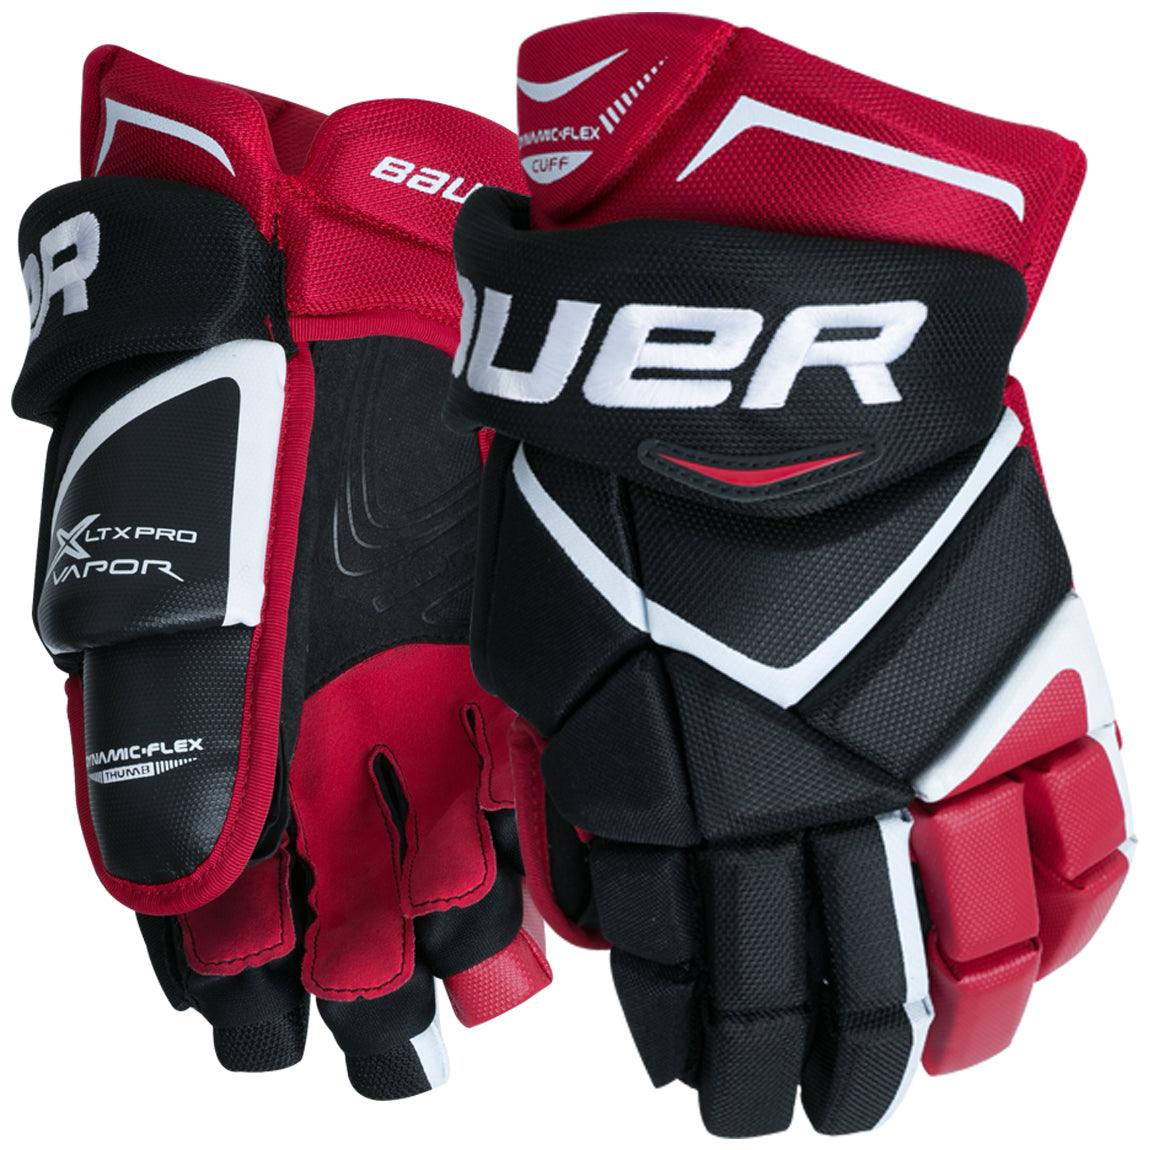 Vapor XLTX Pro Gloves - Junior - Sports Excellence